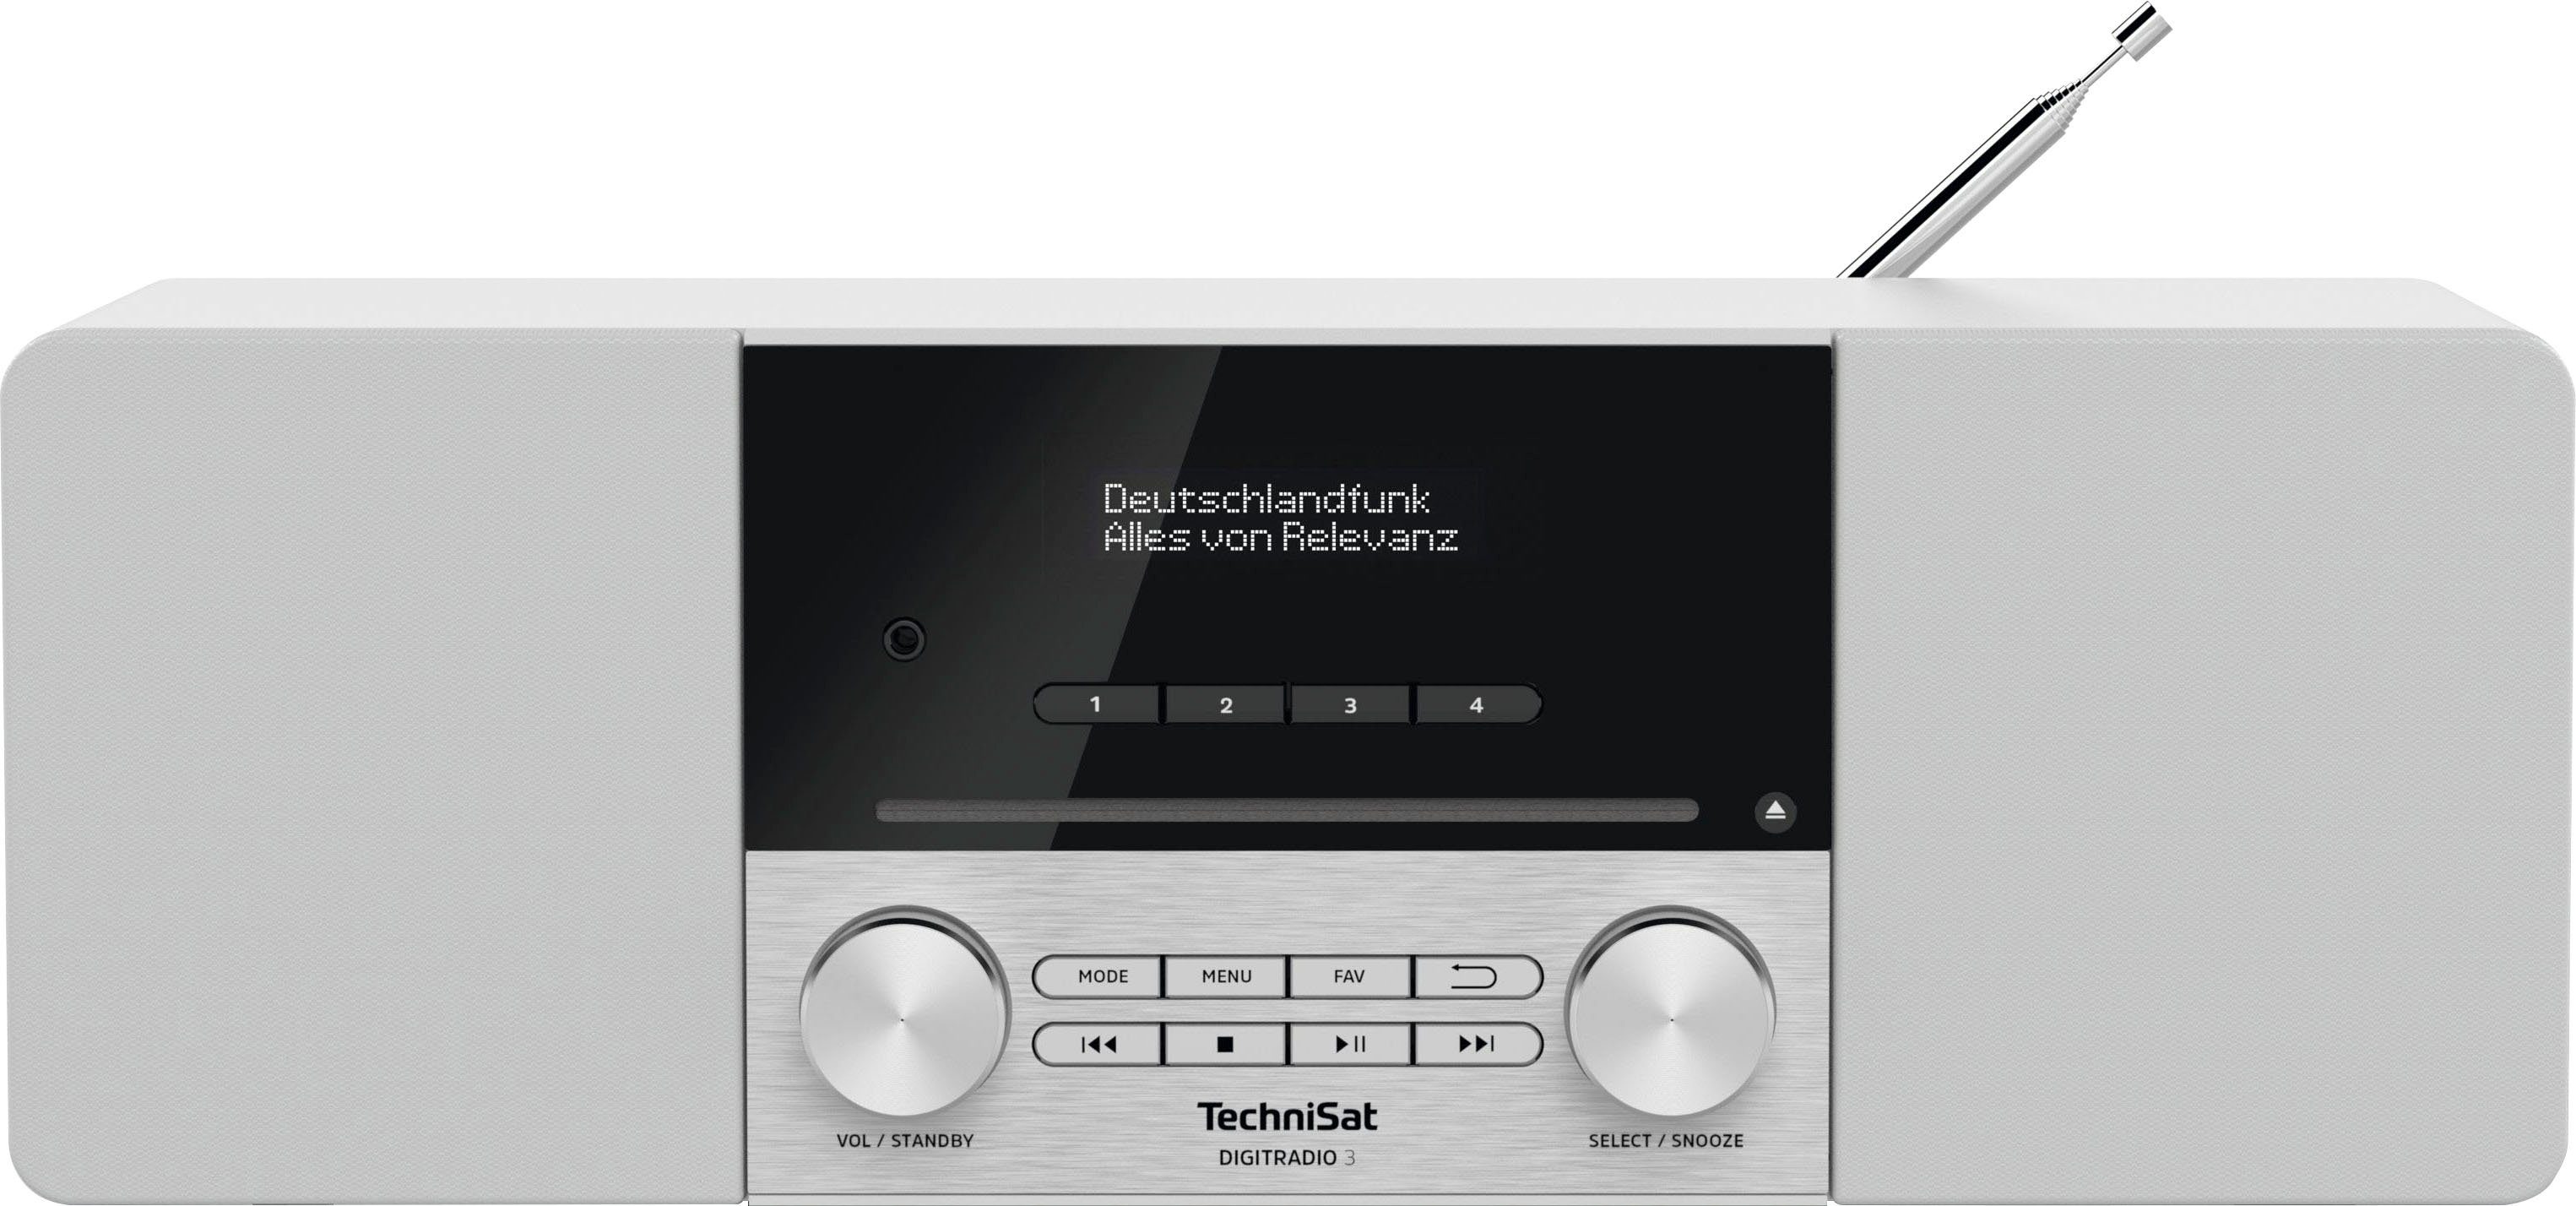 TechniSat DIGITRADIO 3 Digitalradio Made W, RDS, (DAB) weiß in Germany) CD-Player, 20 (Digitalradio (DAB), UKW mit